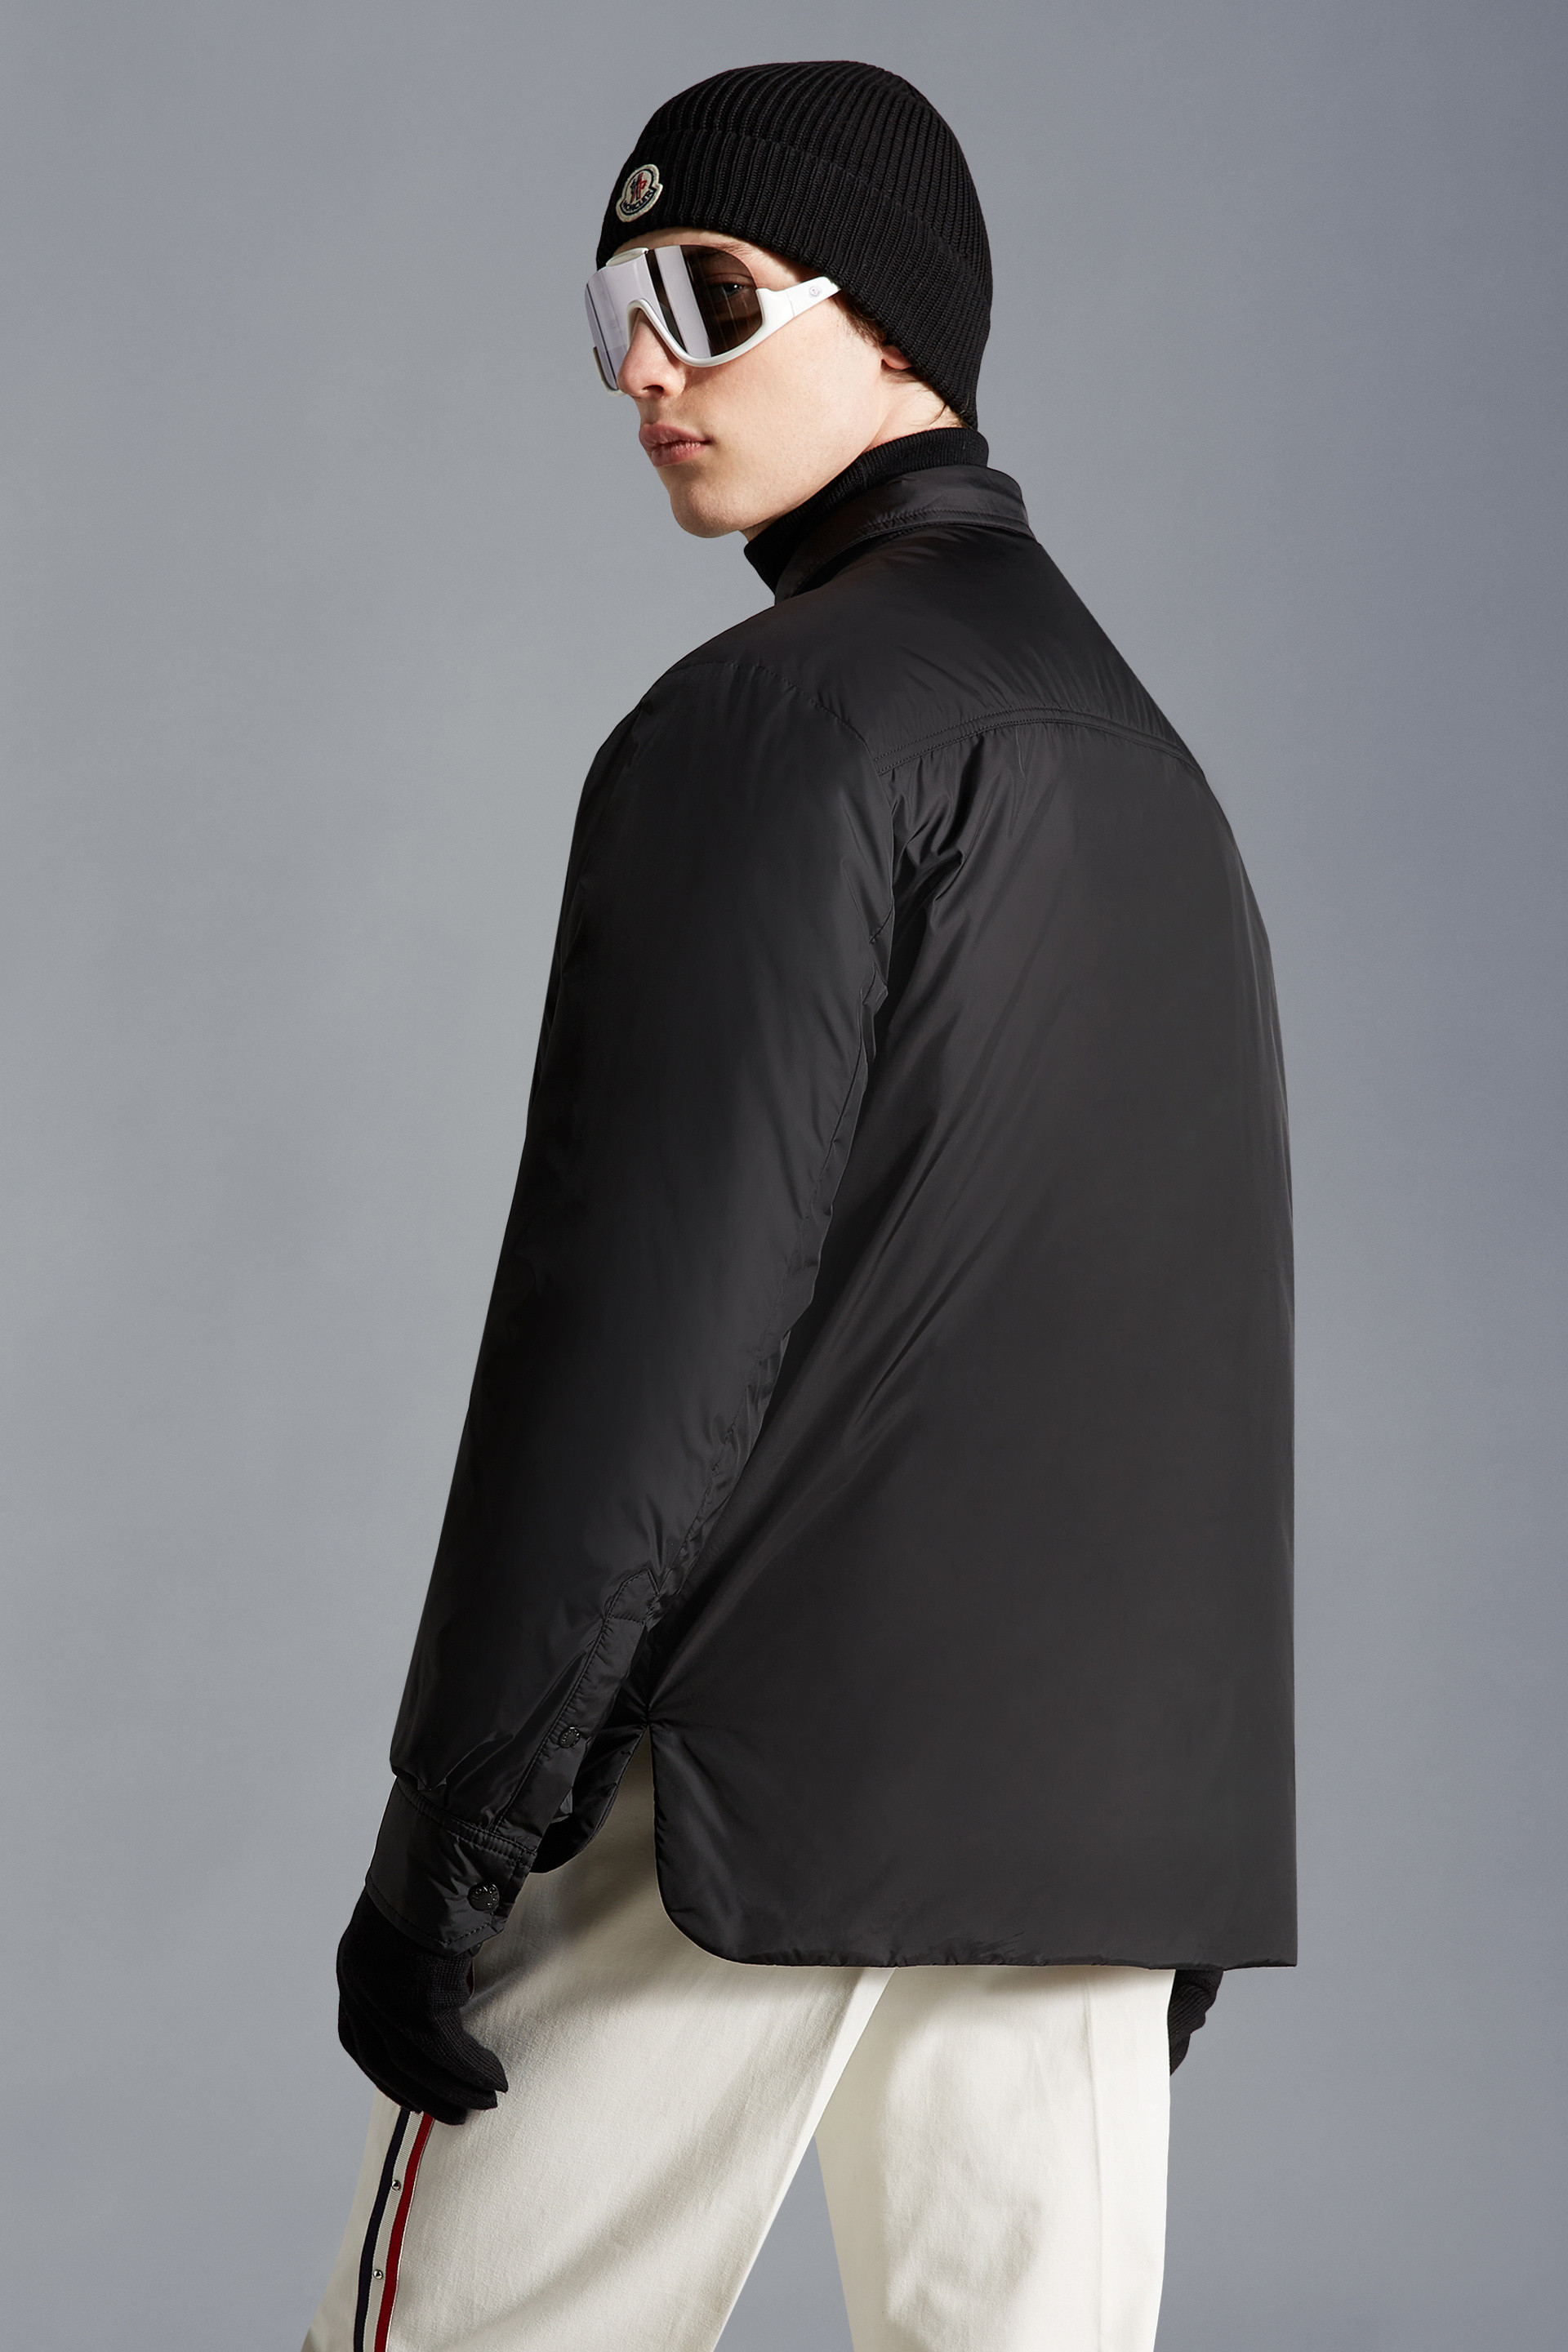 Jackets for Men - Outerwear | Moncler IT